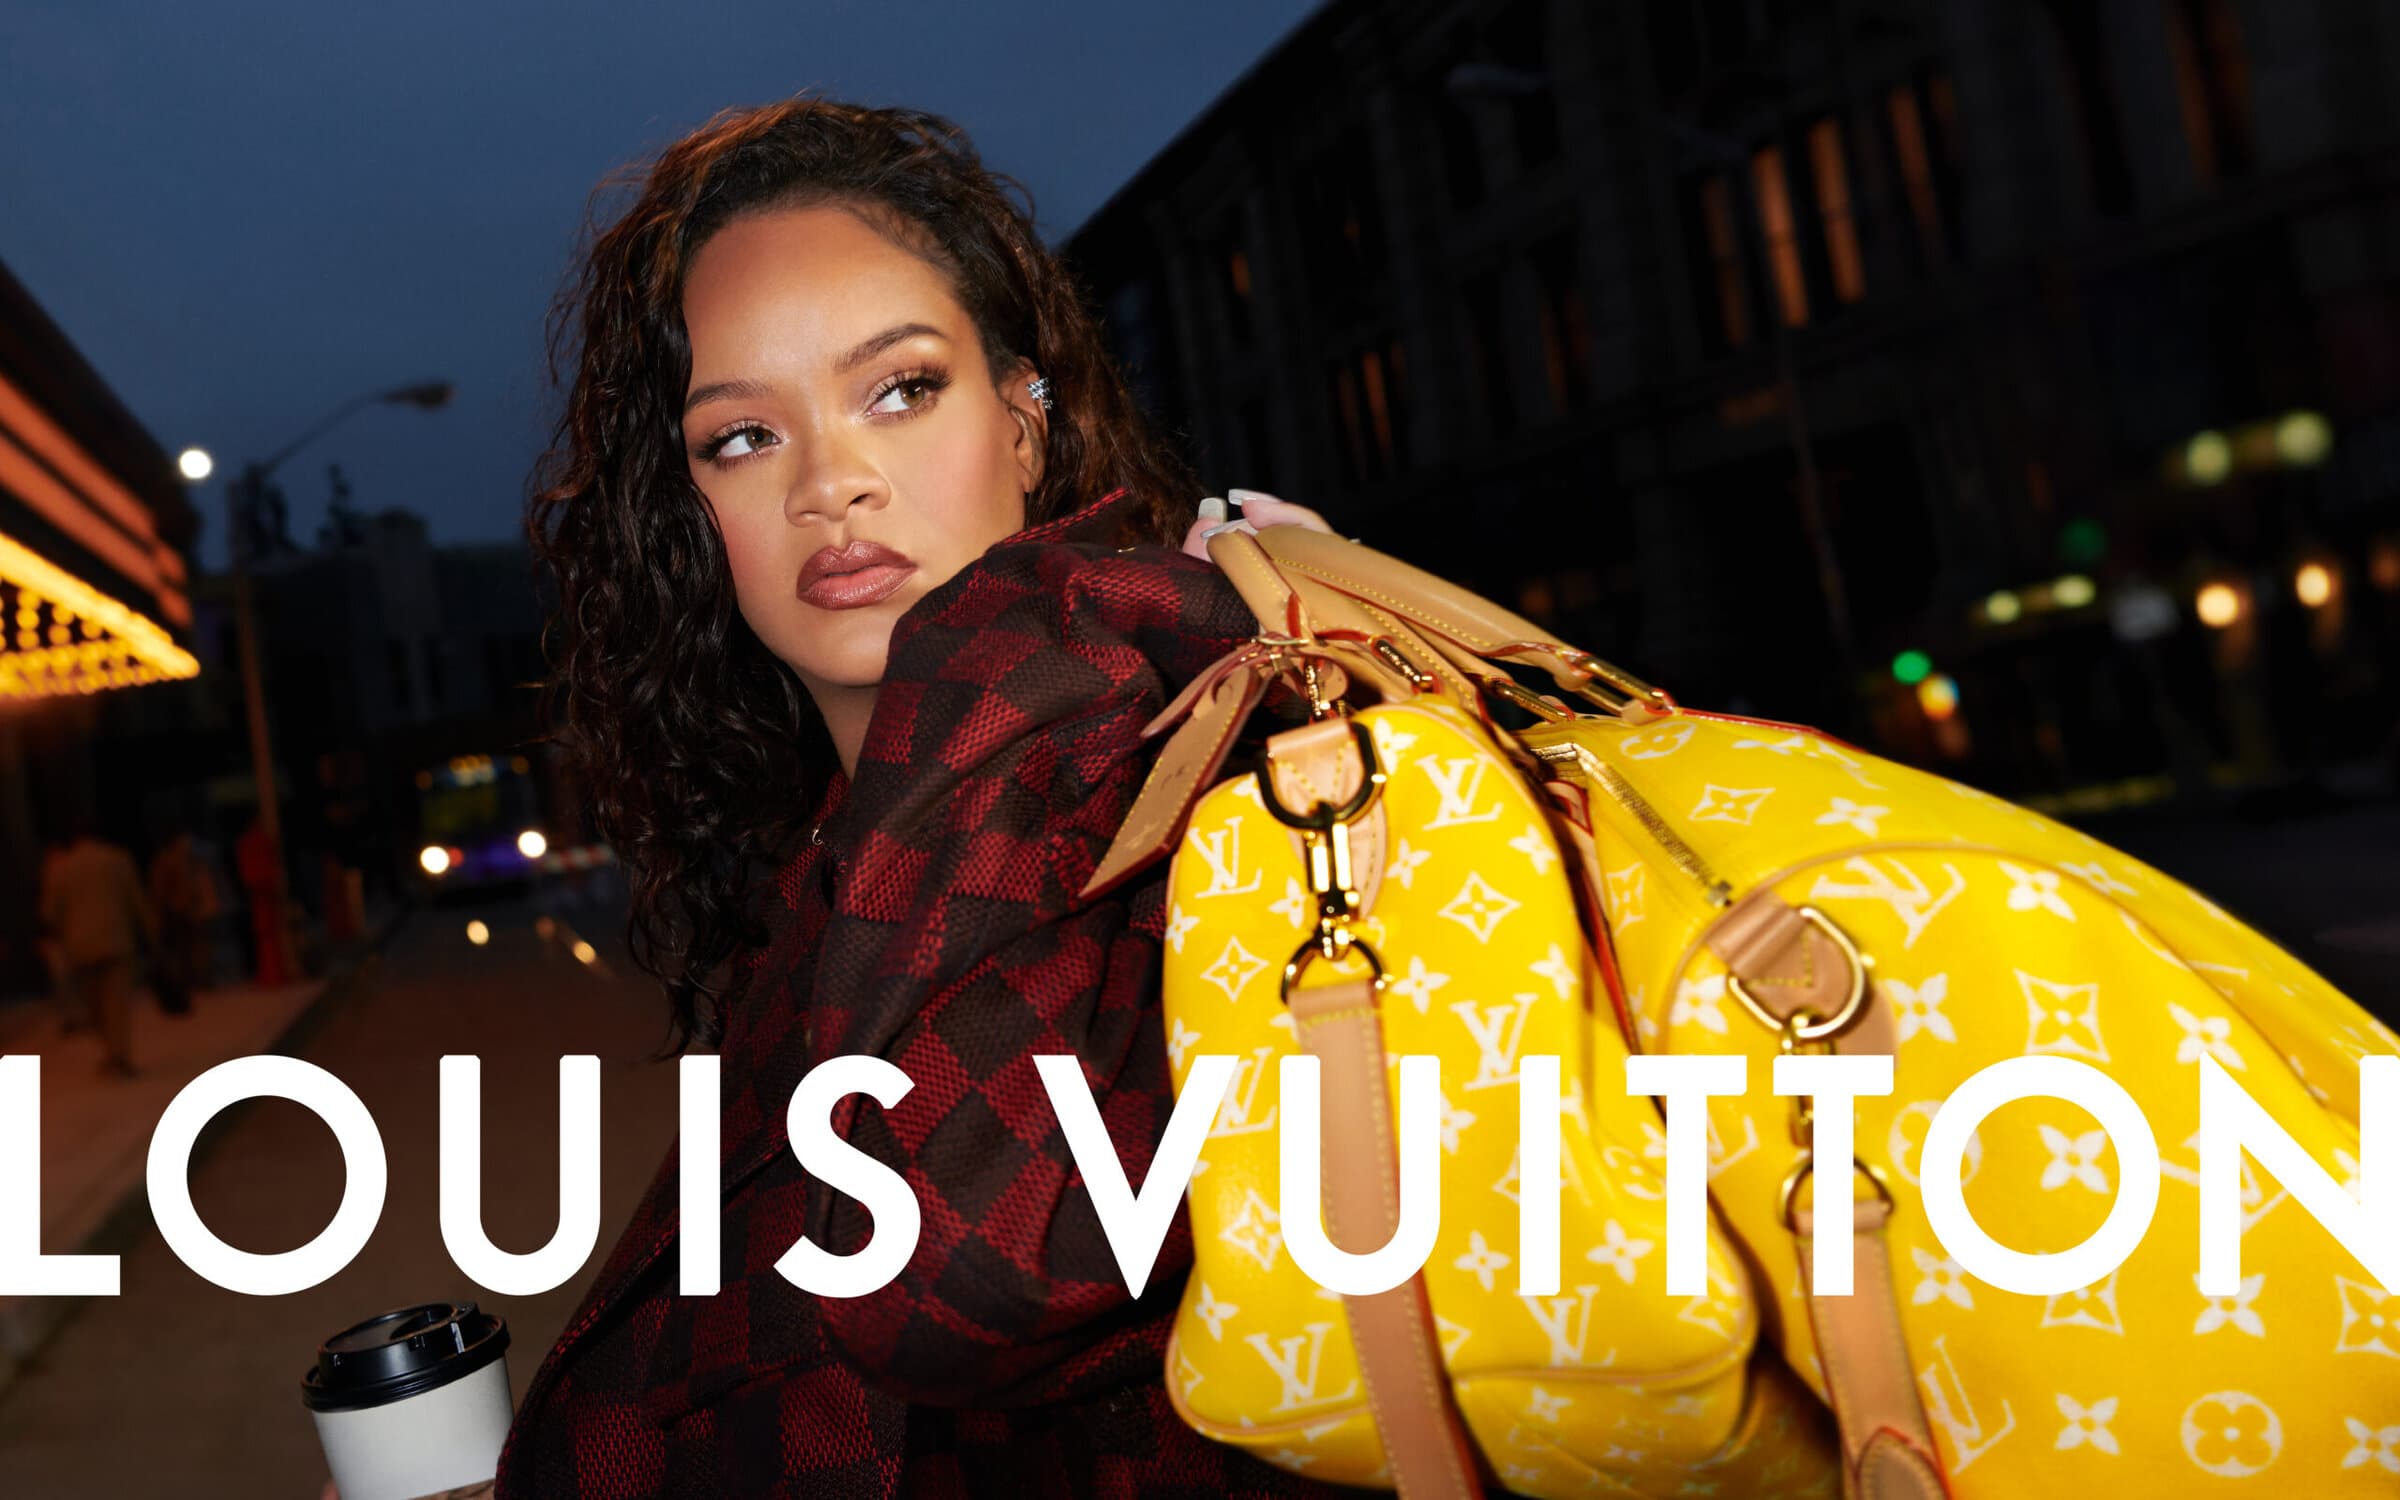 Louis Vuitton Fall/Winter 2017 Men's Campaign